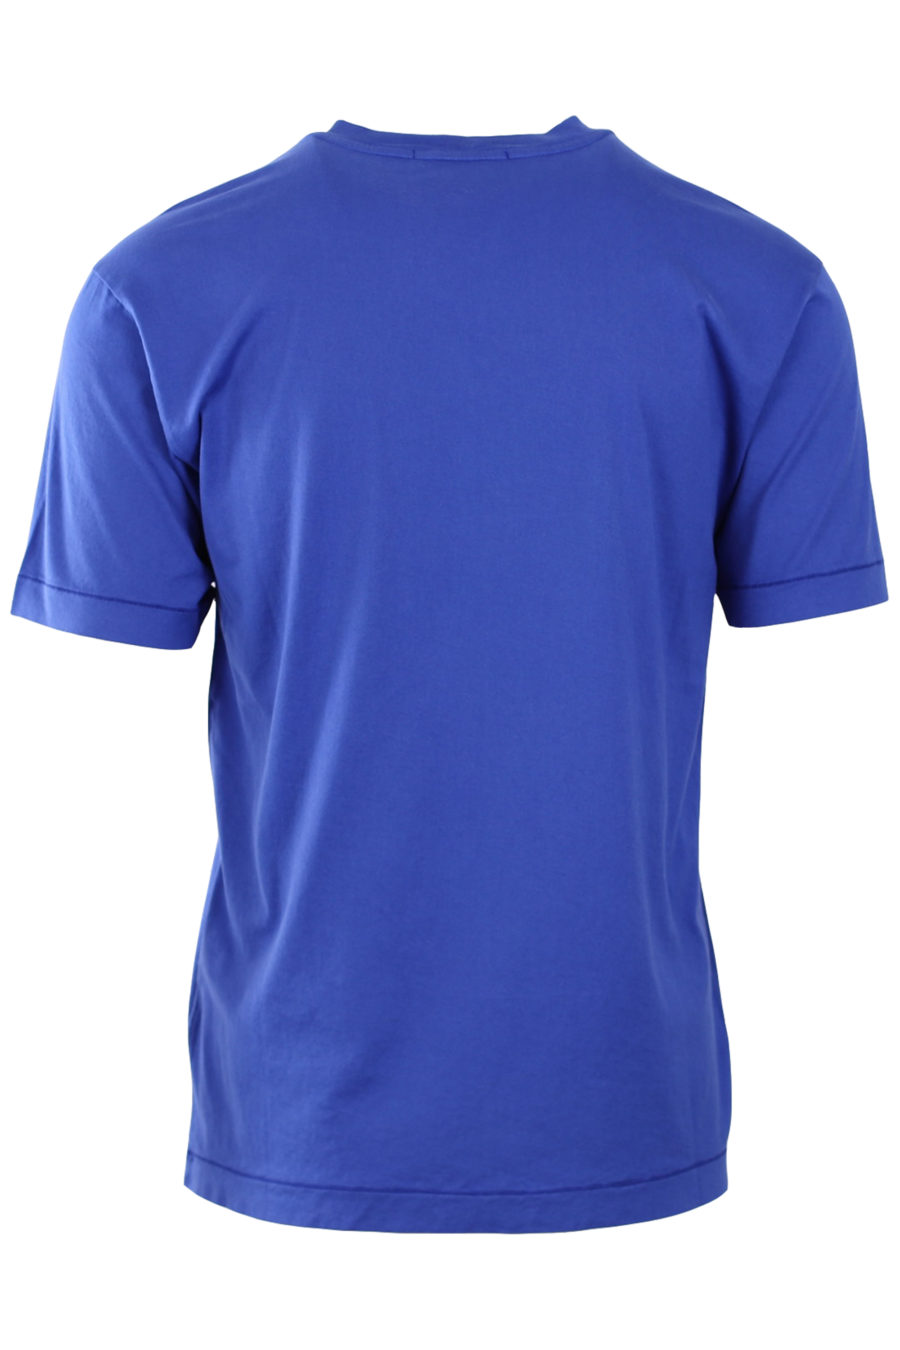 Camiseta azul con parche de la marca - dcc775abd52becea25ae950542b09c8b7834d75f